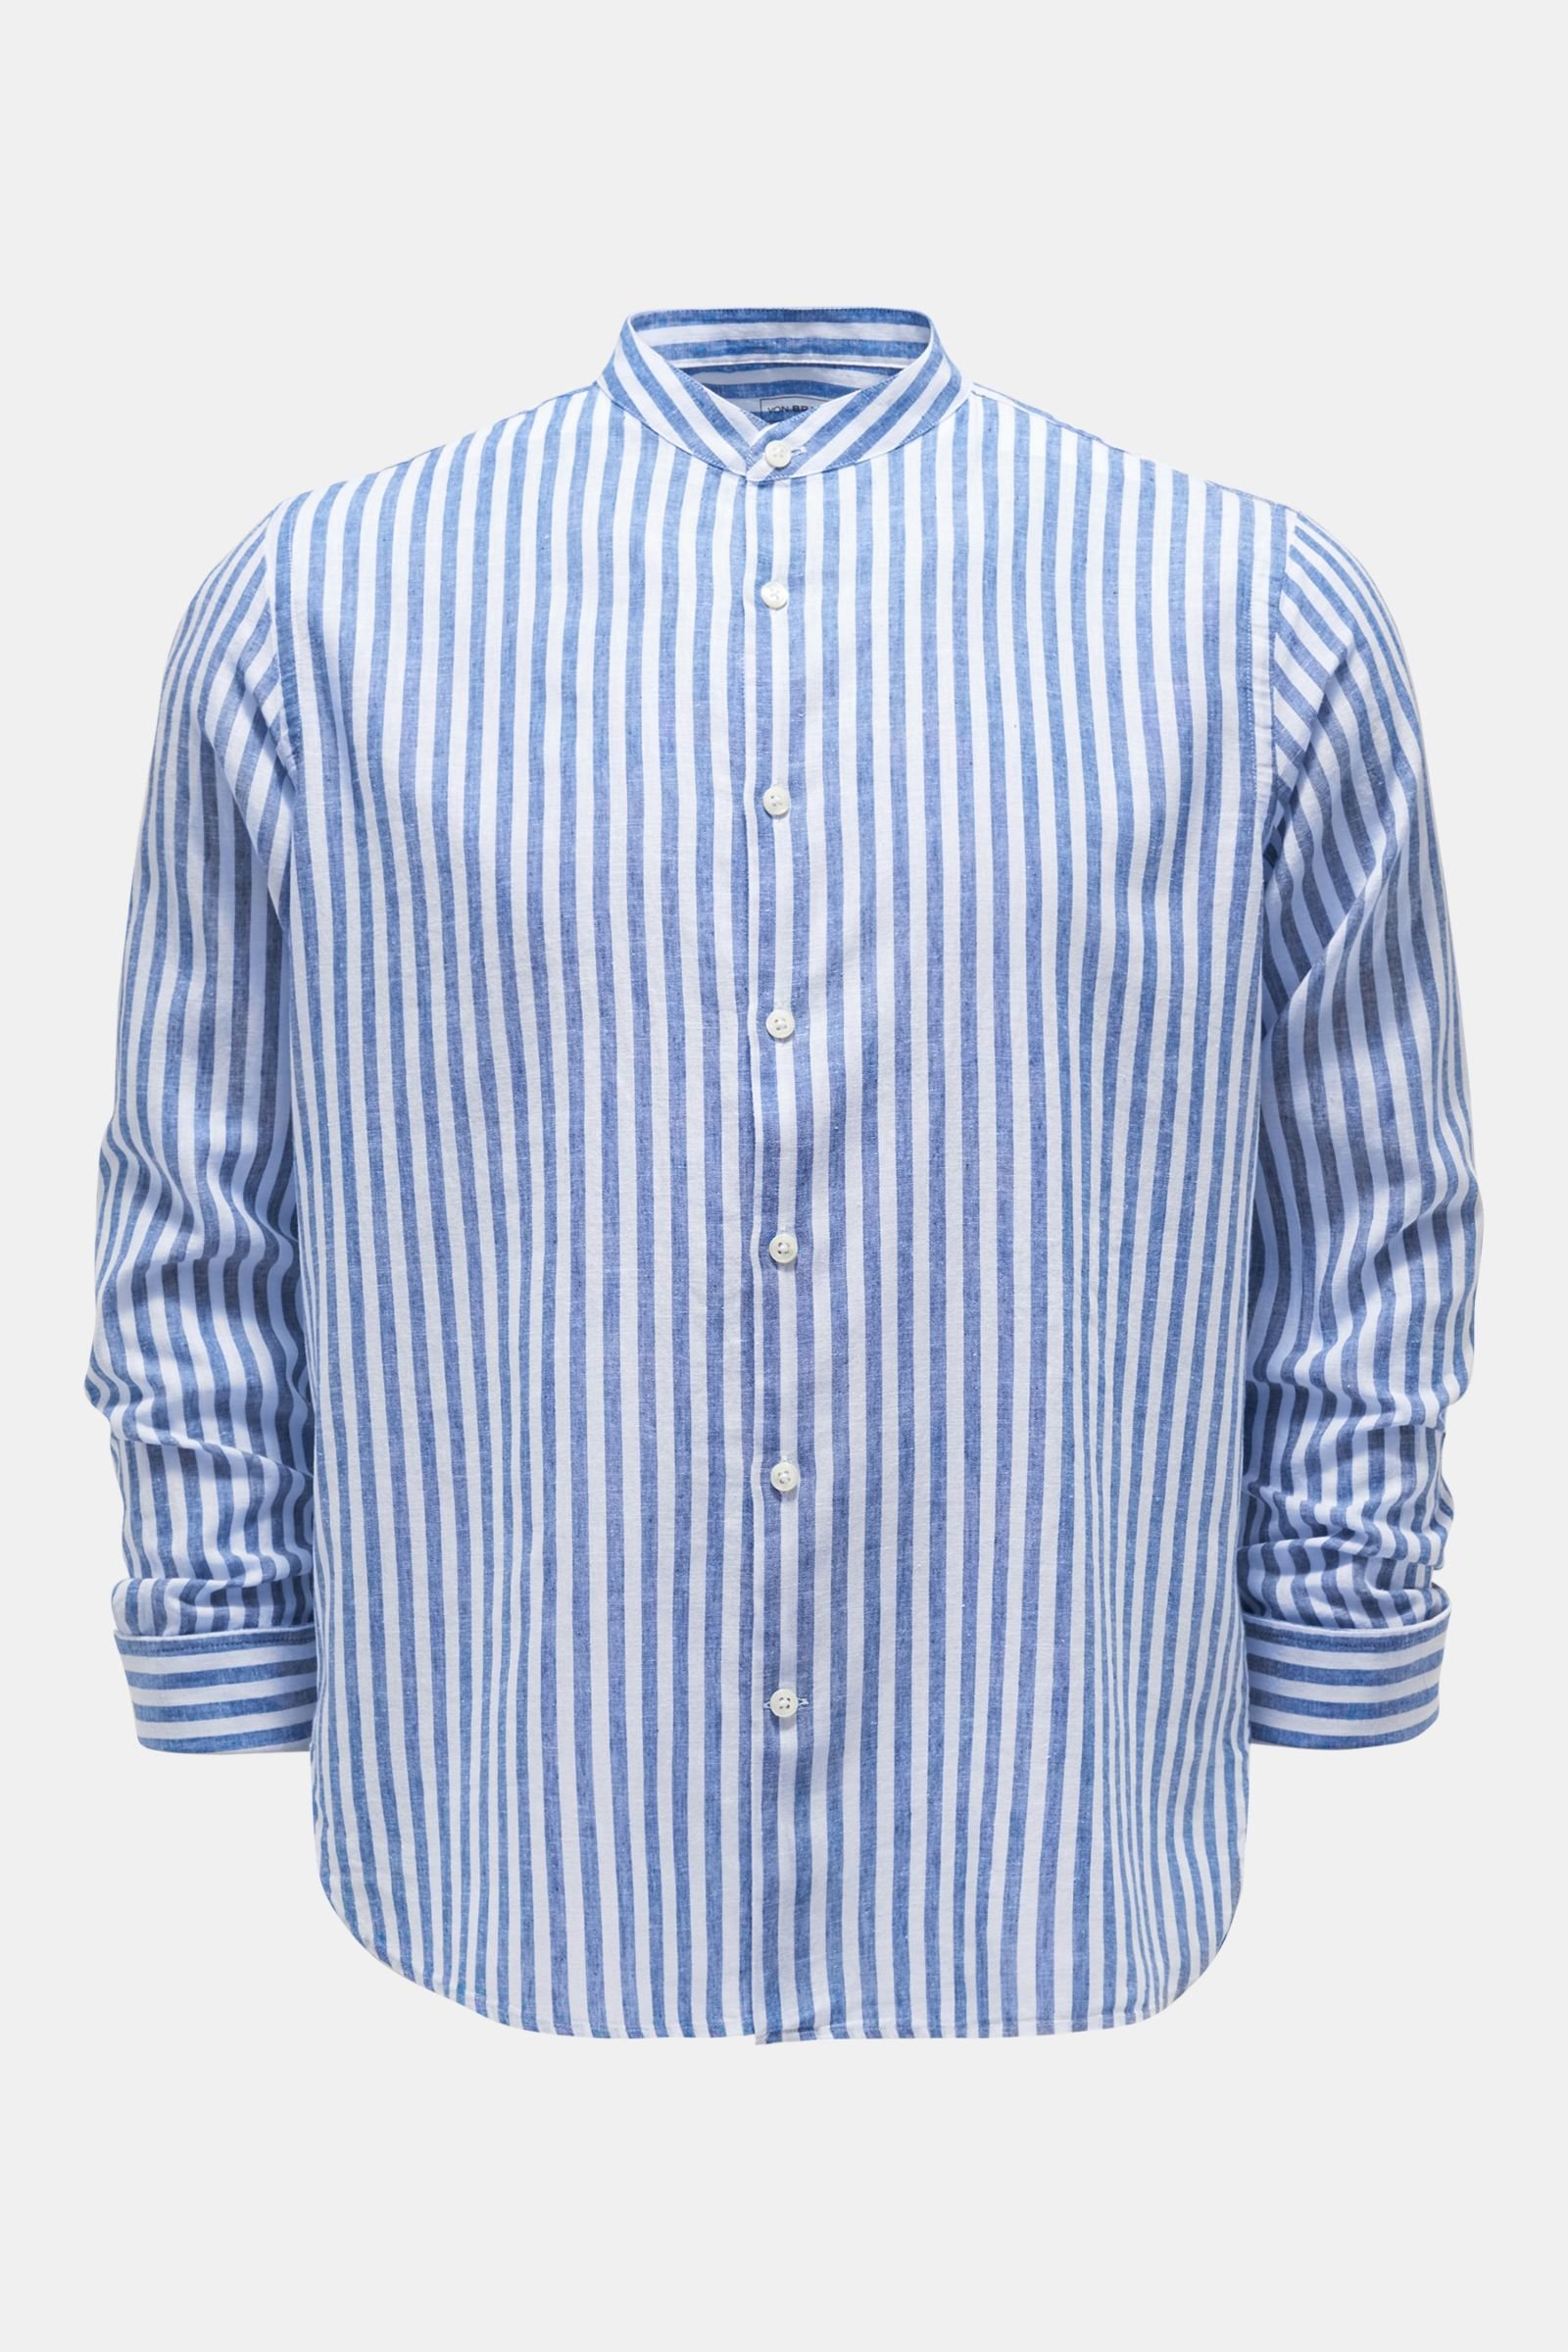 Casual shirt grandad collar dark blue/white striped